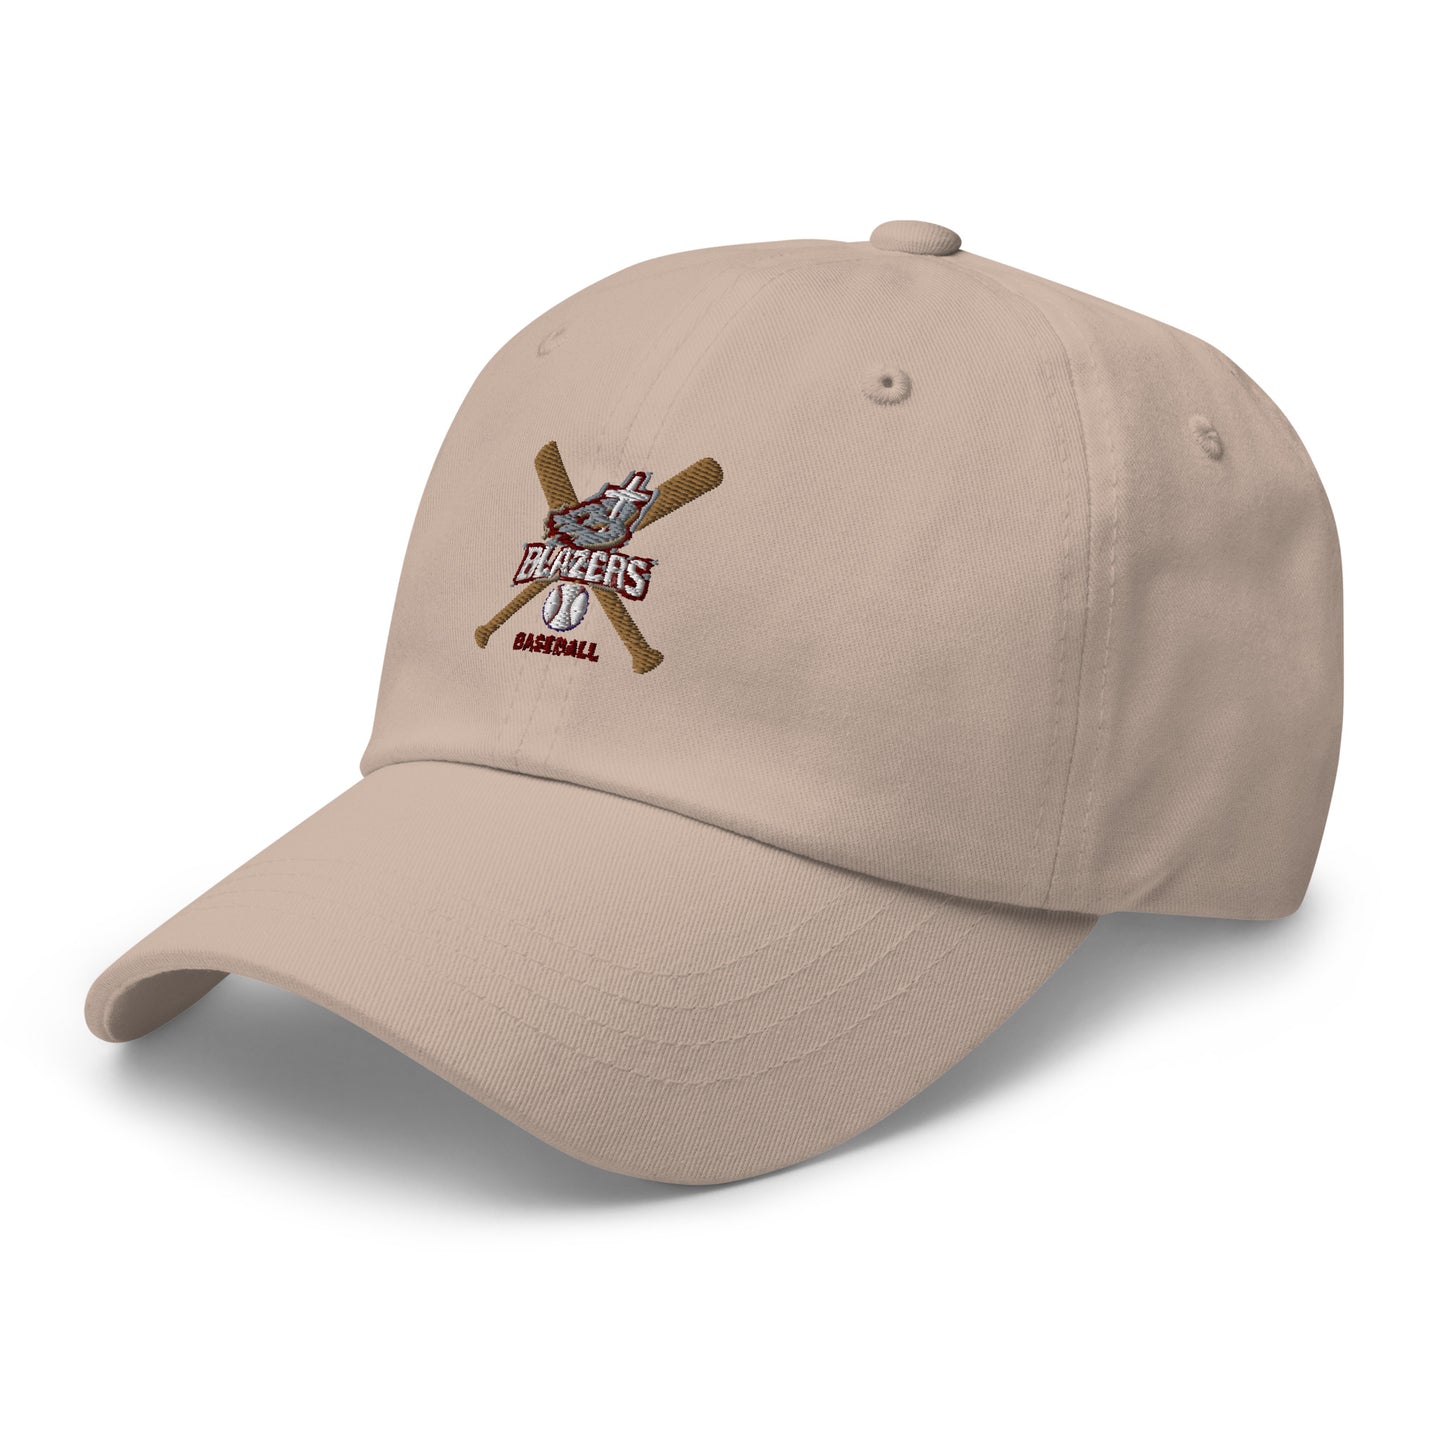 Blazers Baseball Dad Hat